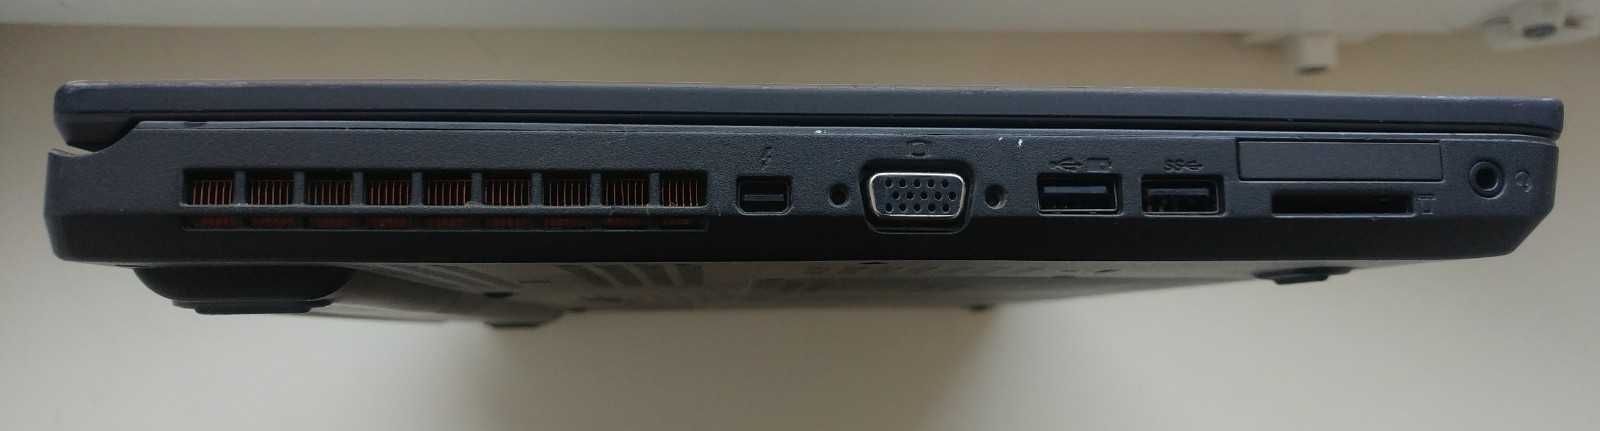 Рабочая станция Lenovo W541 i7 3.6GHz 32GB ssd 512GB 3K+IPS nVidia